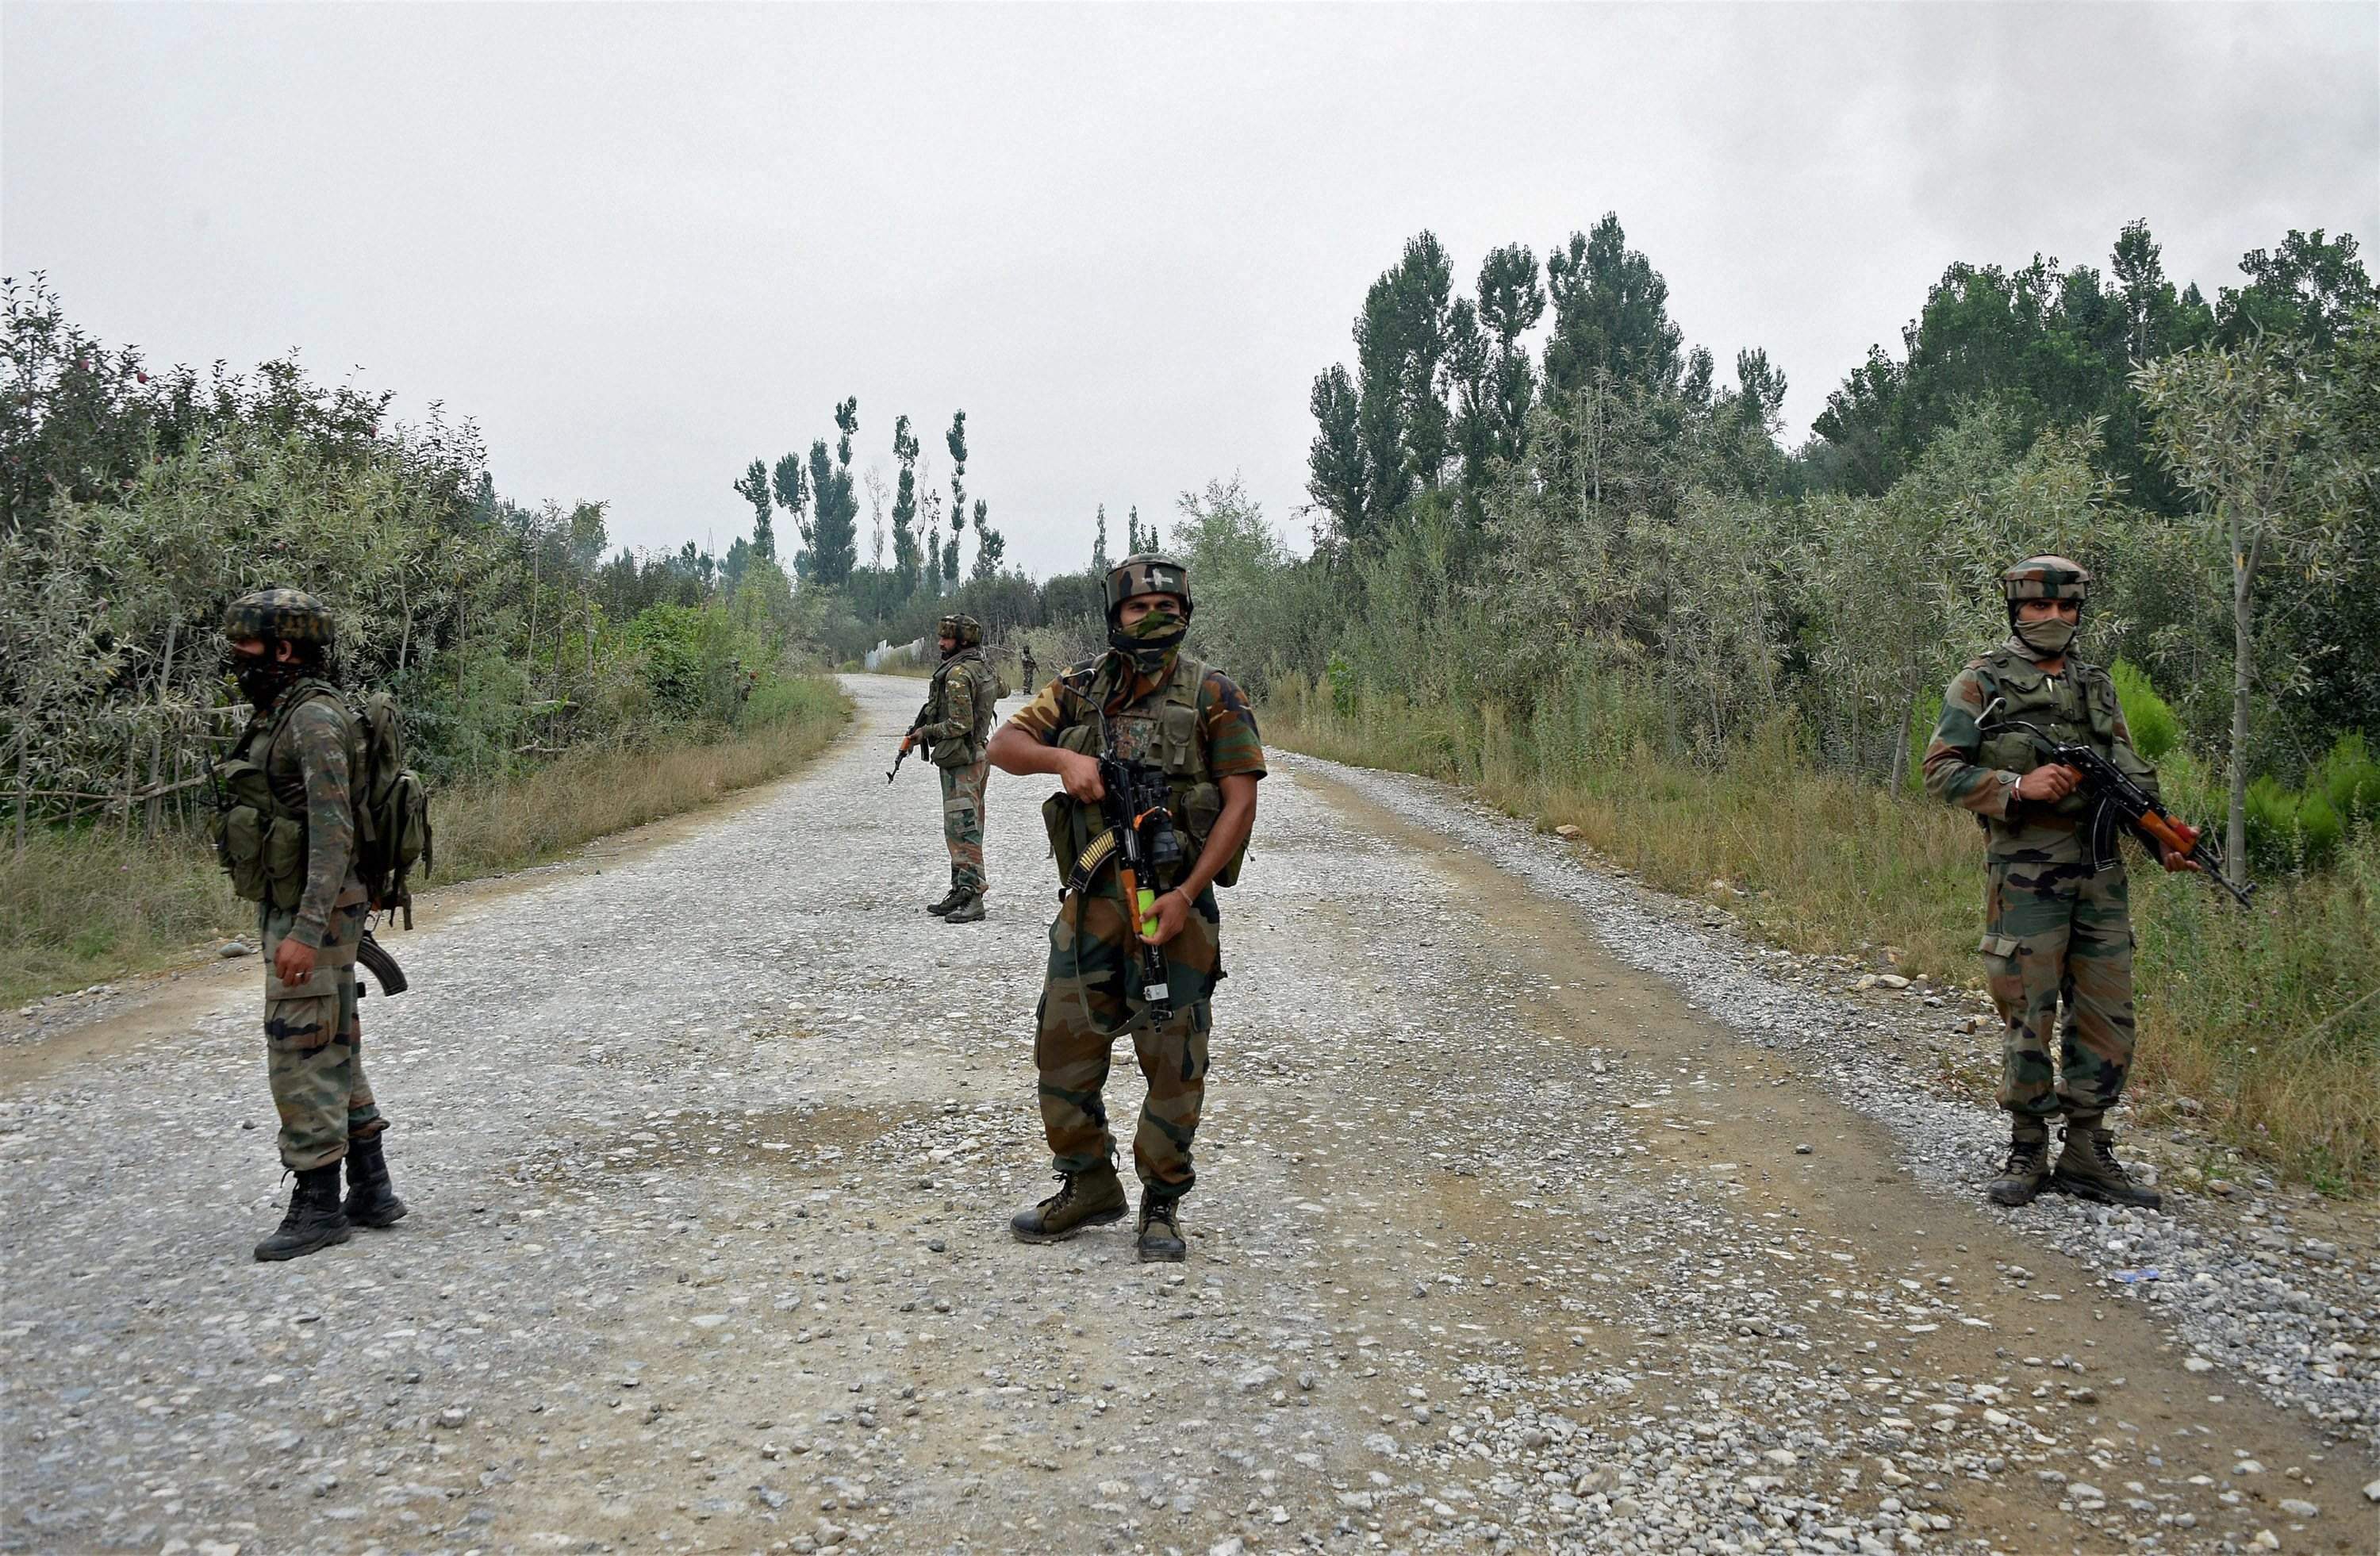 5 jawans, 2 terrorists killed in pre-dawn attack in Pulwama: CRPF